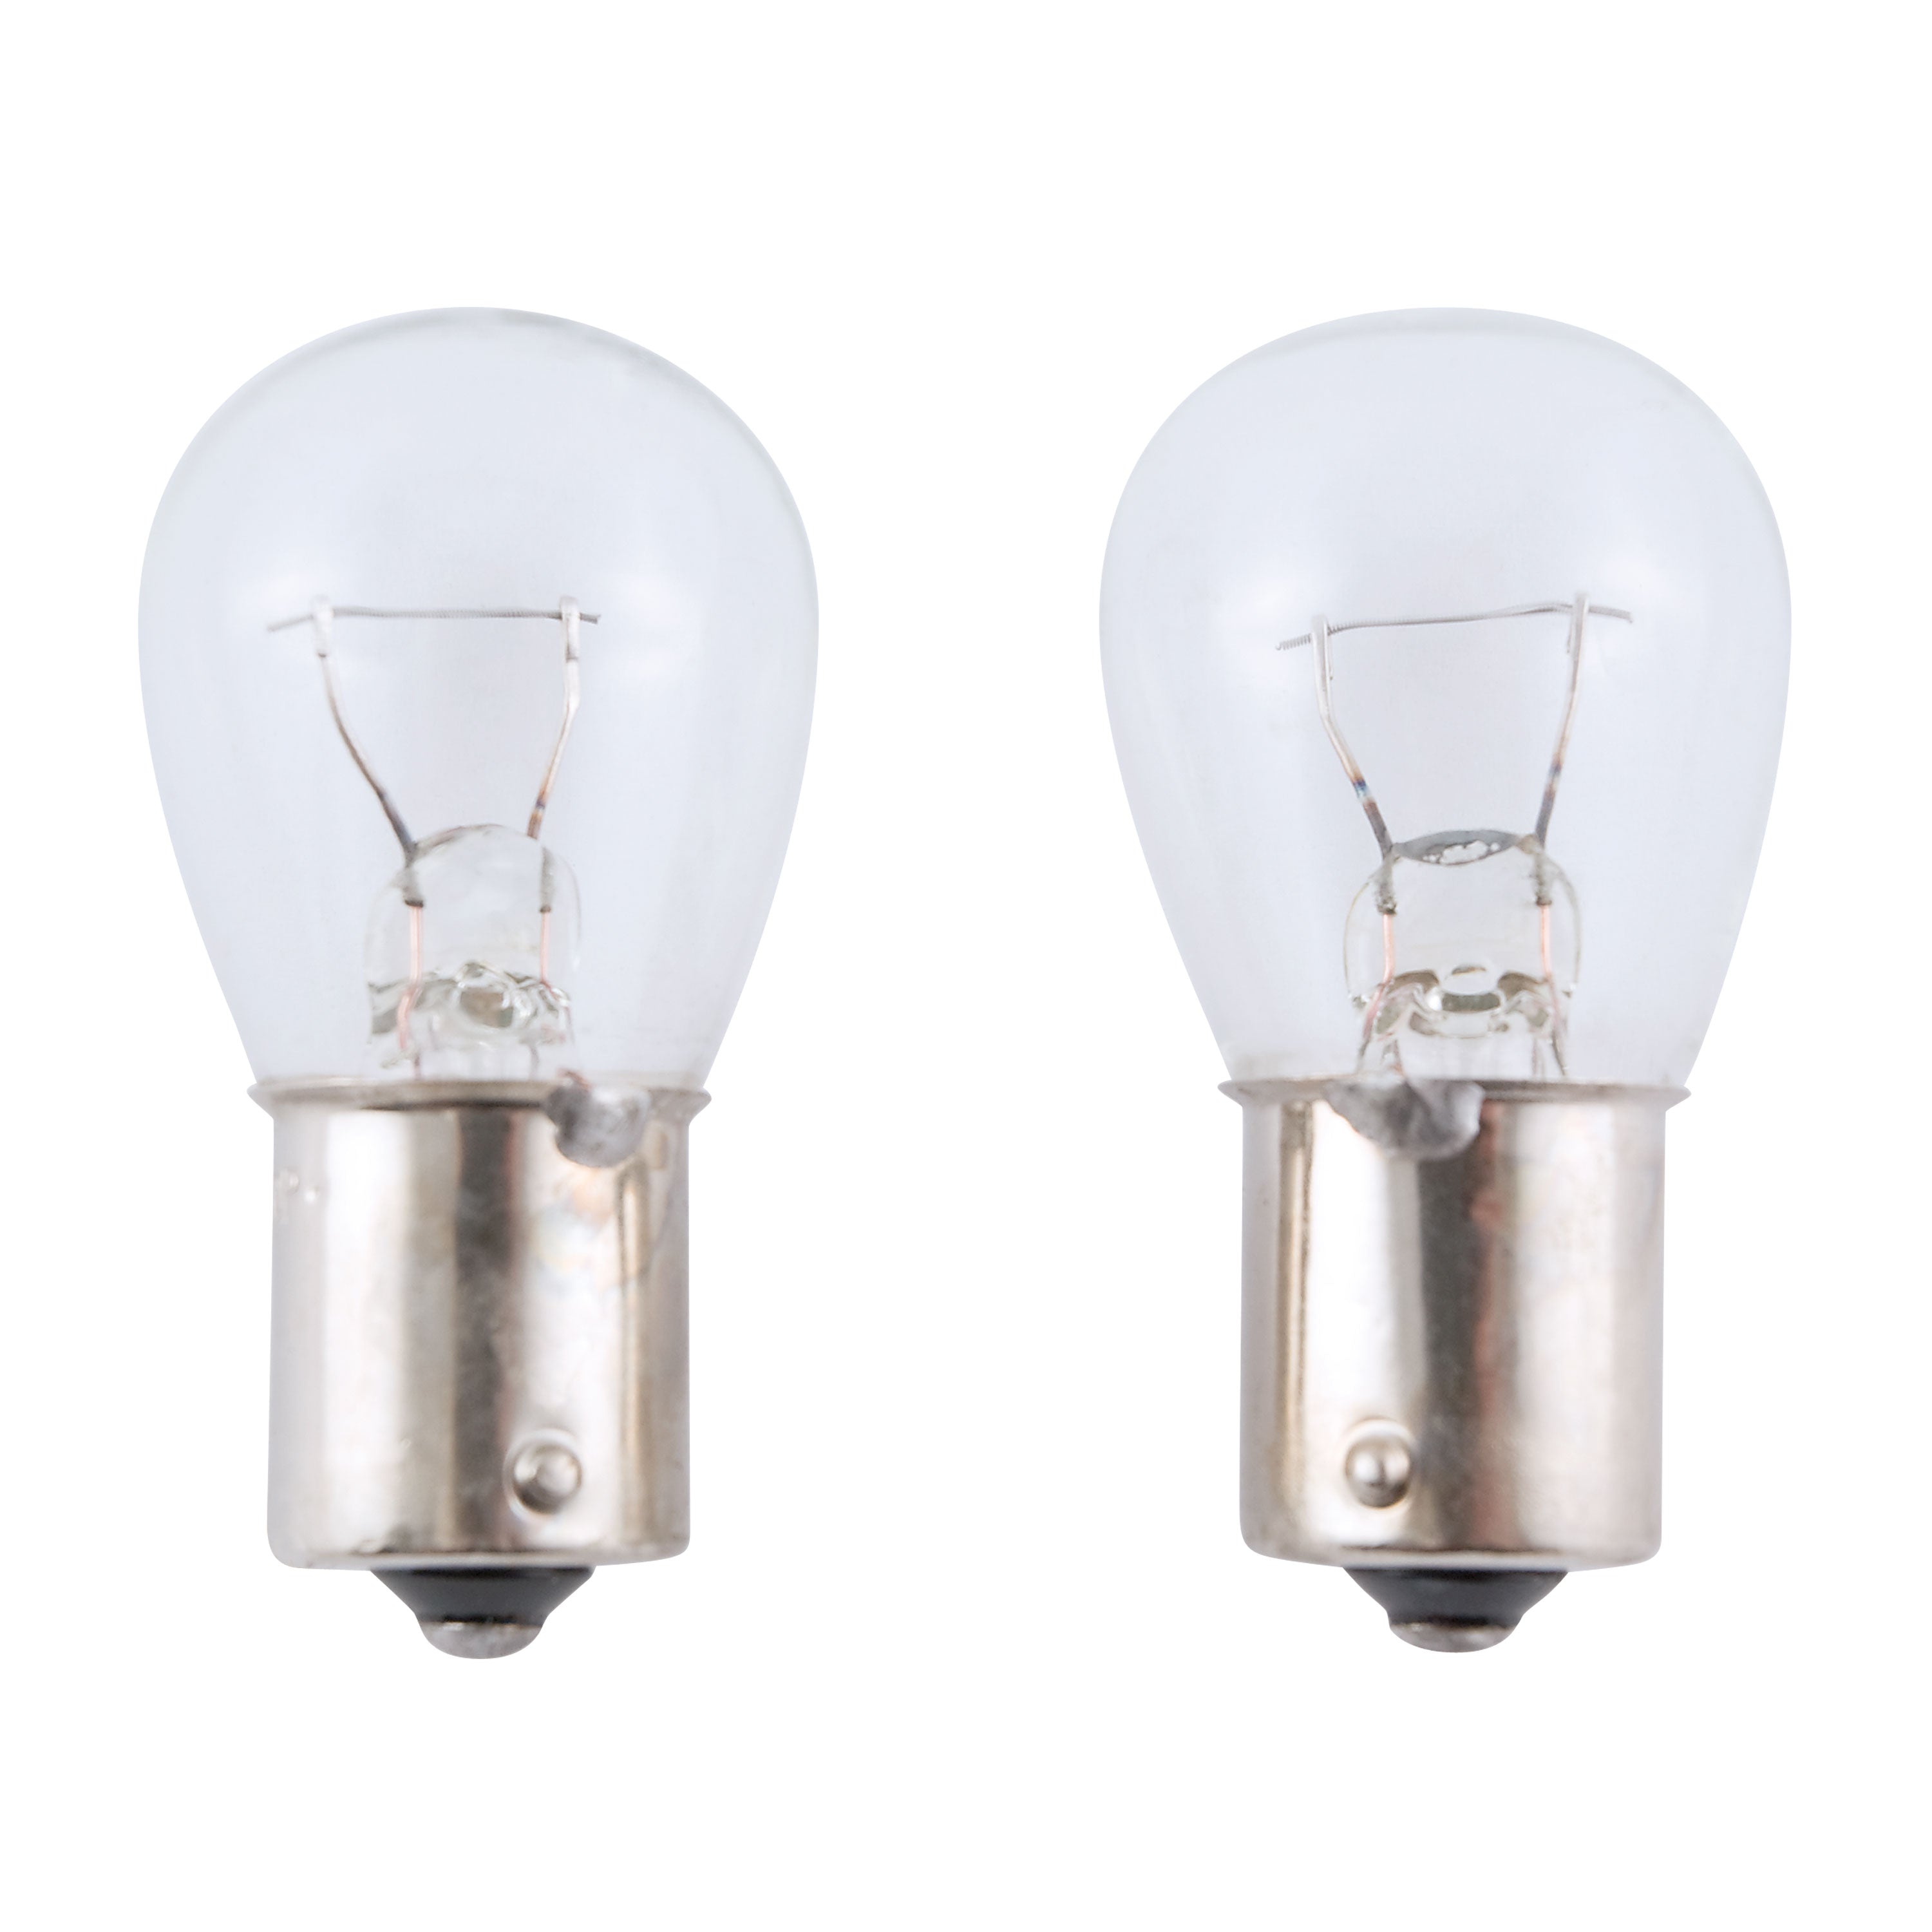 AP Products 016-02-1141-1156 Bulb #1141/1156